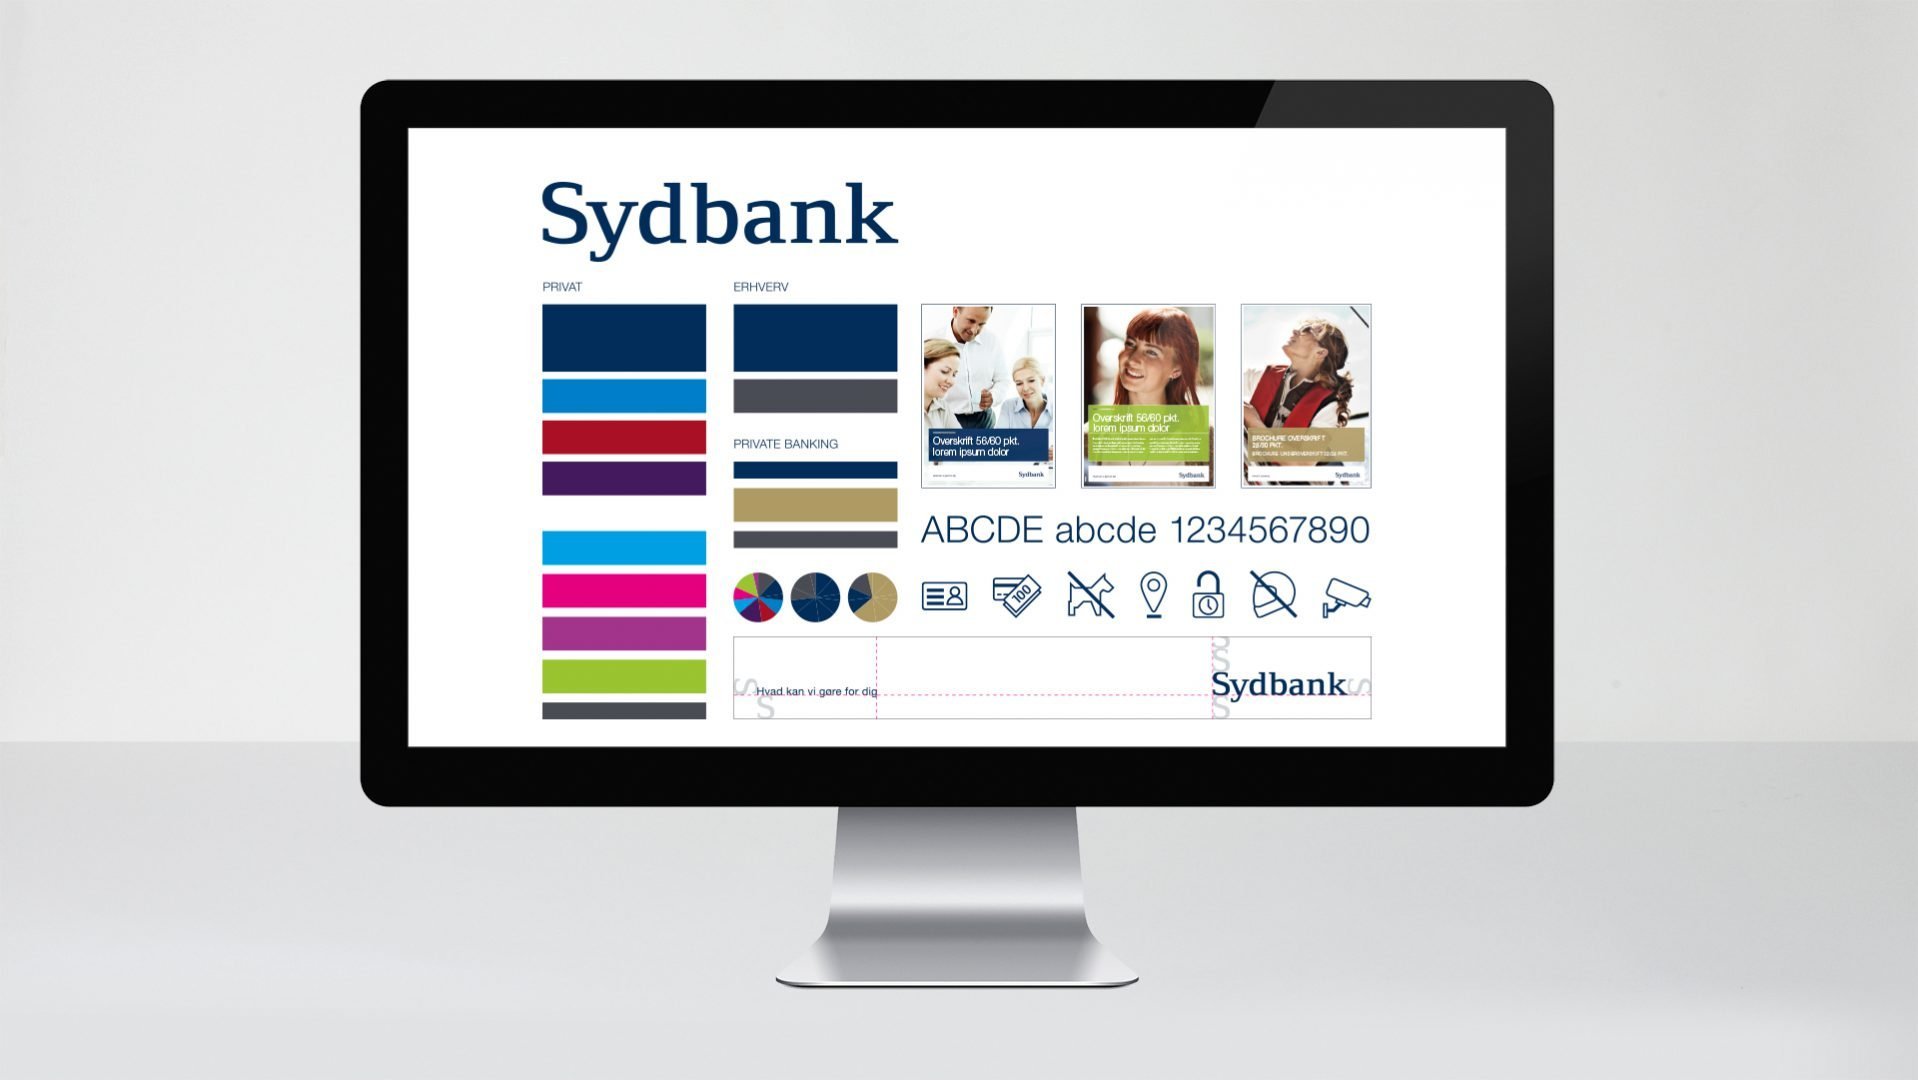 Sydbank style guide by LOOP Associates